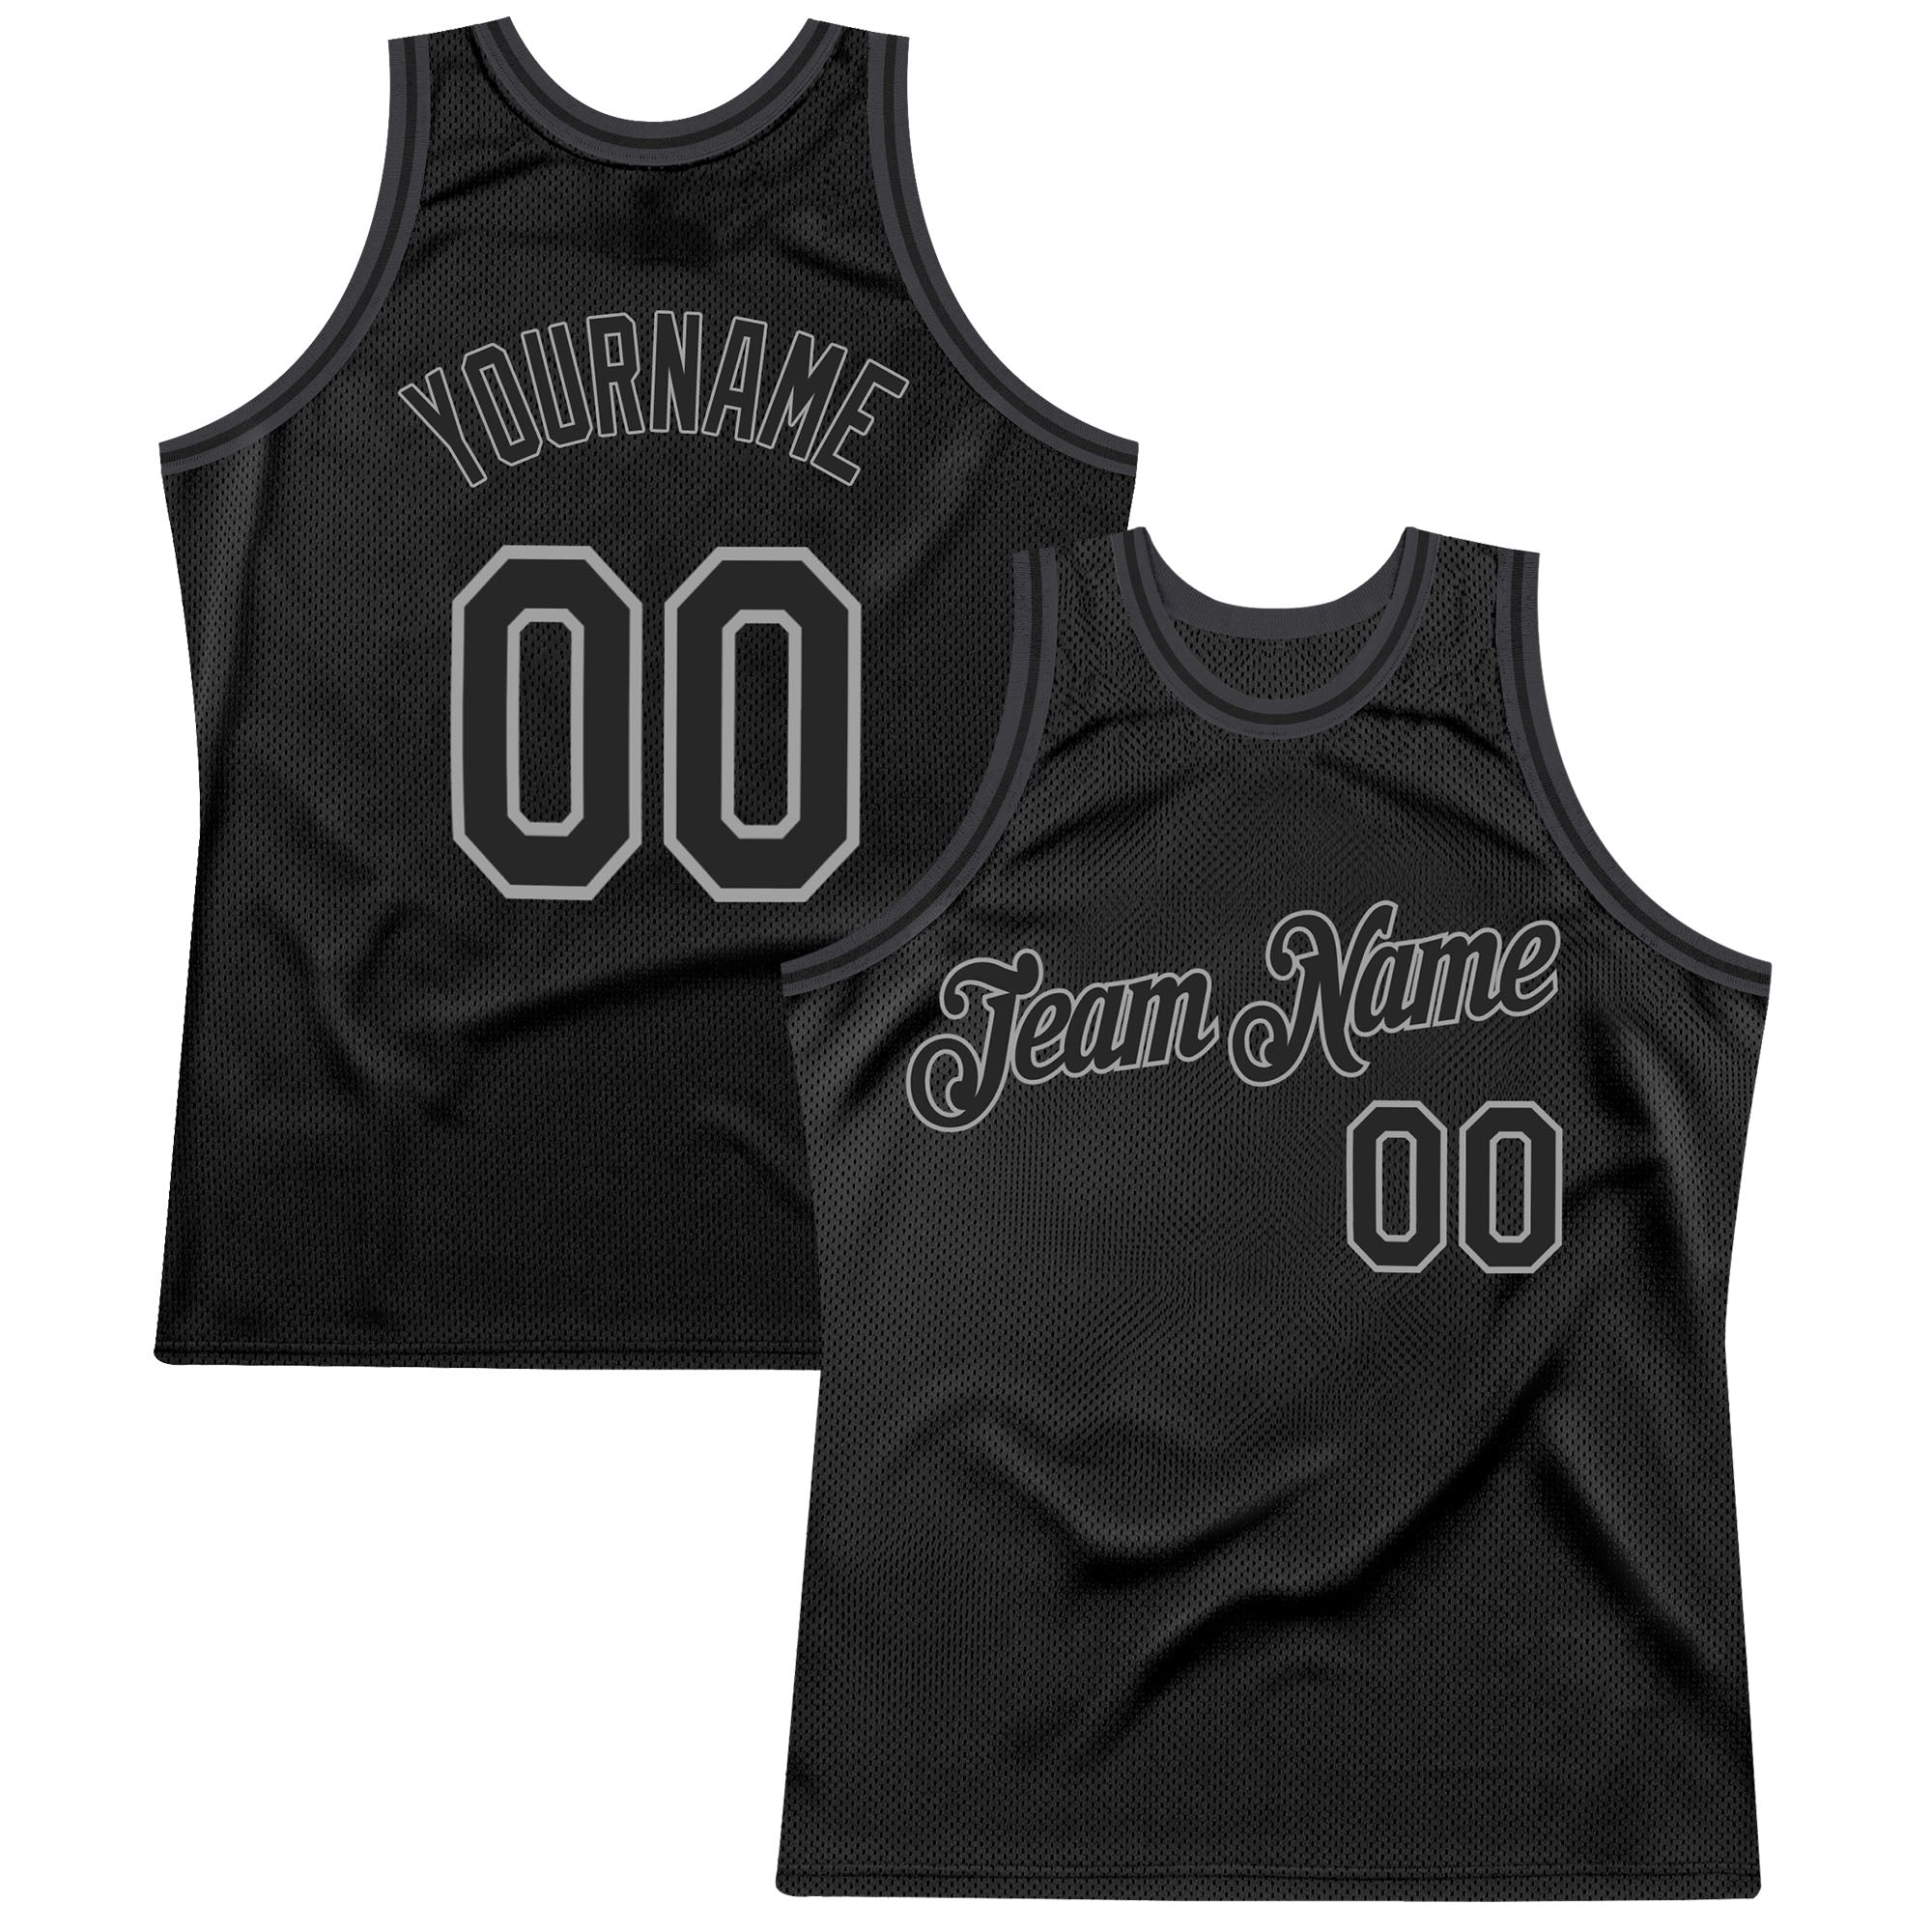 FANSIDEA Custom Silver Gray Black Round Neck Suit Basketball Jersey Youth Size:XL